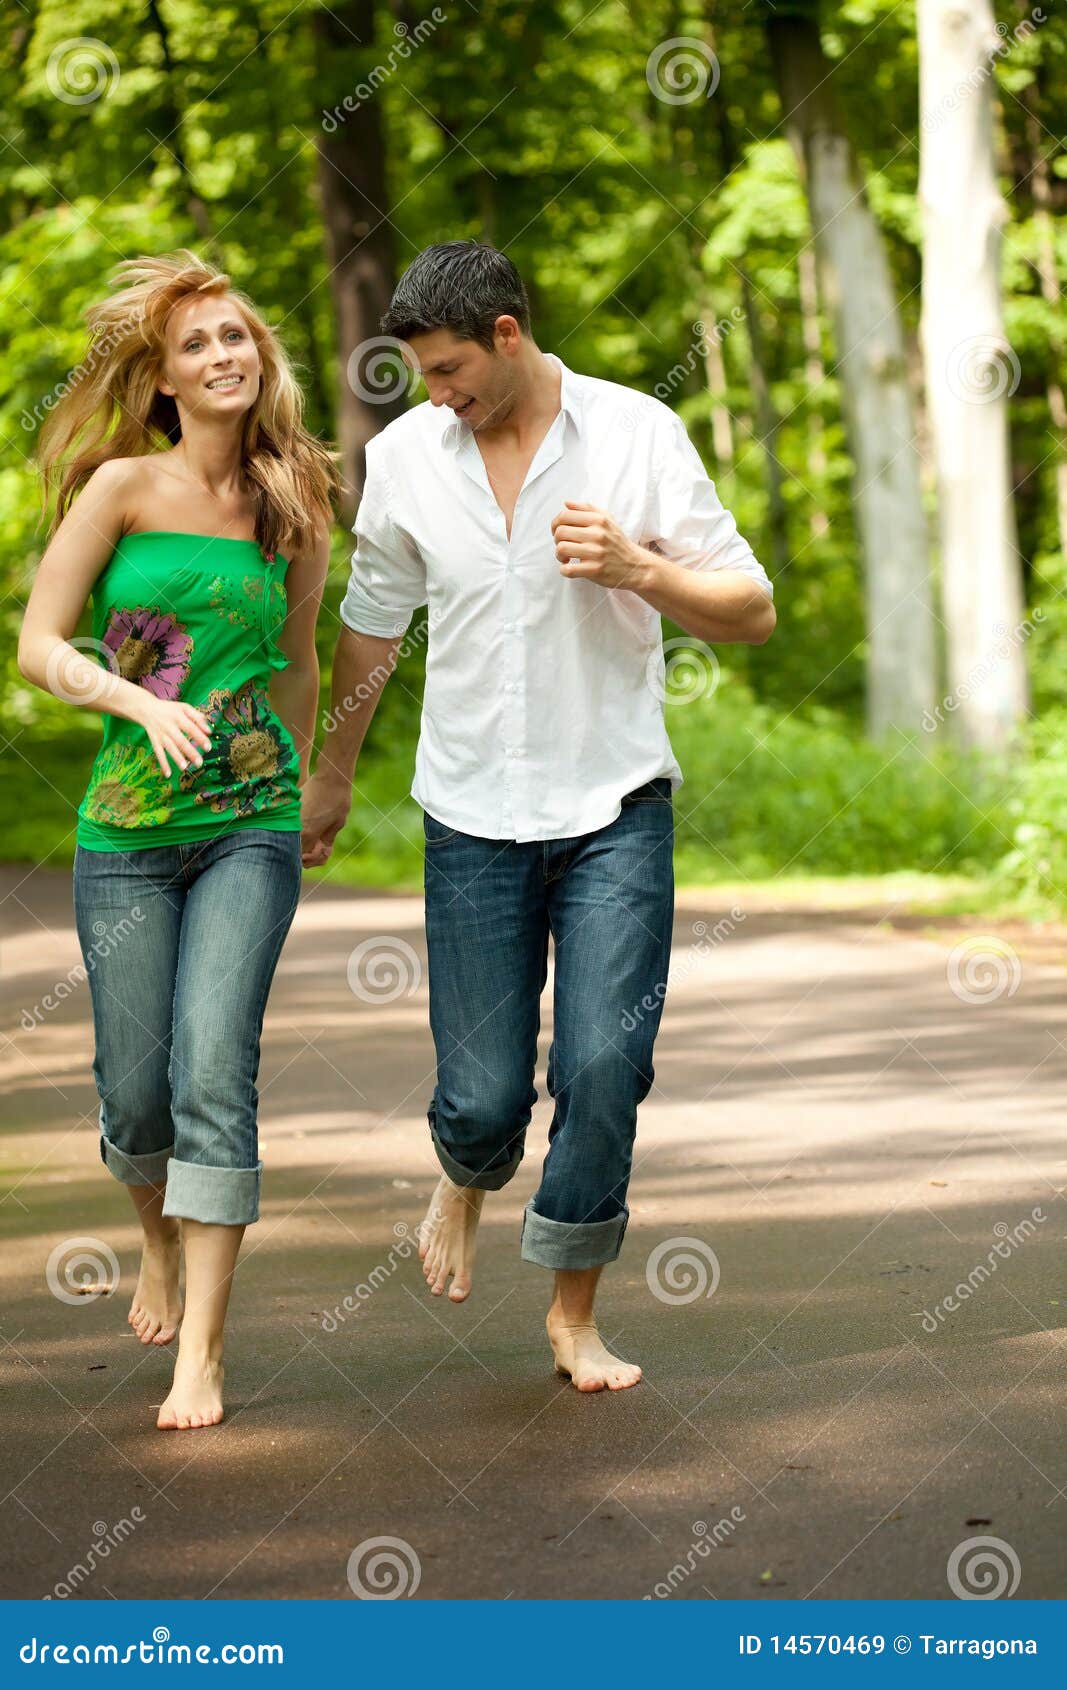 https://thumbs.dreamstime.com/z/park-walk-couple-14570469.jpg